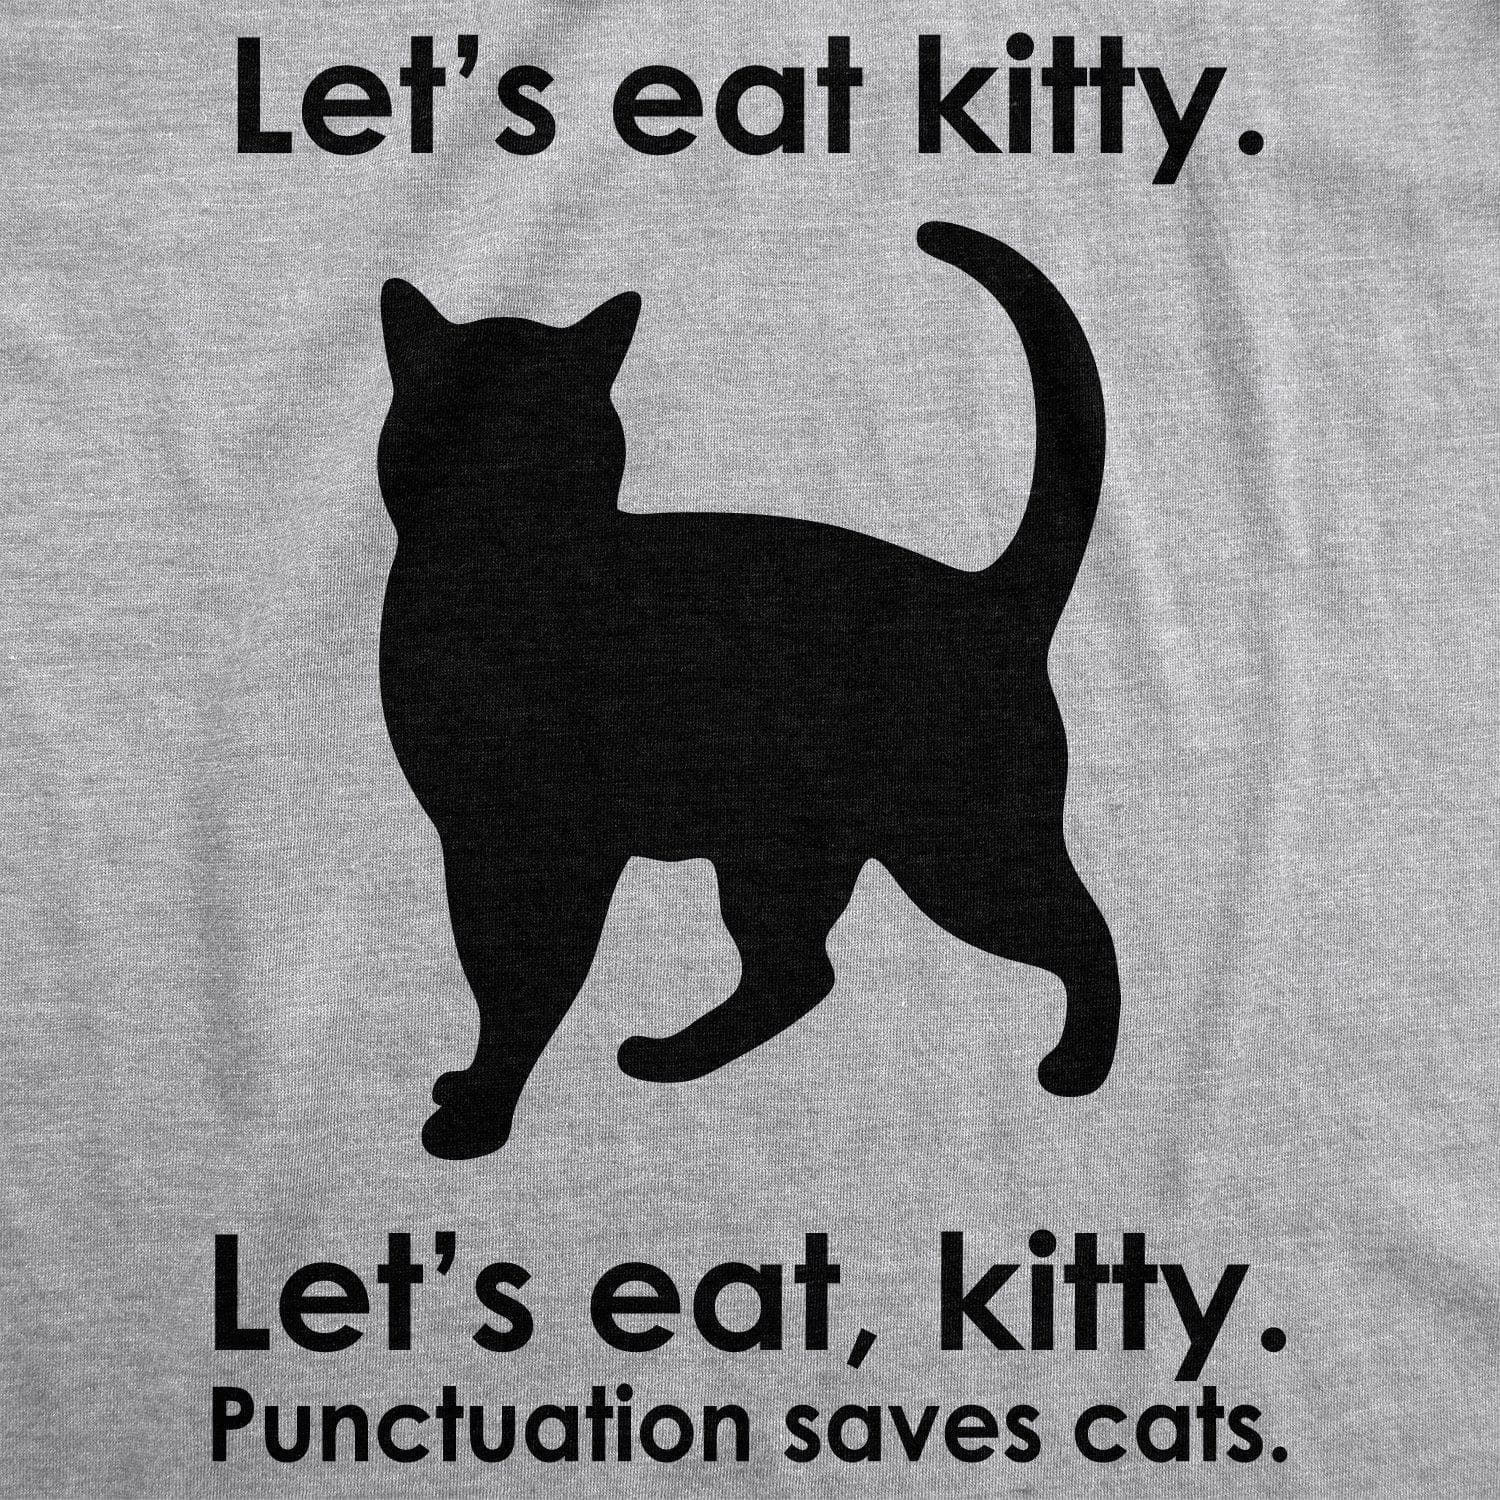 Let's Eat Kitty Men's Tshirt  -  Crazy Dog T-Shirts